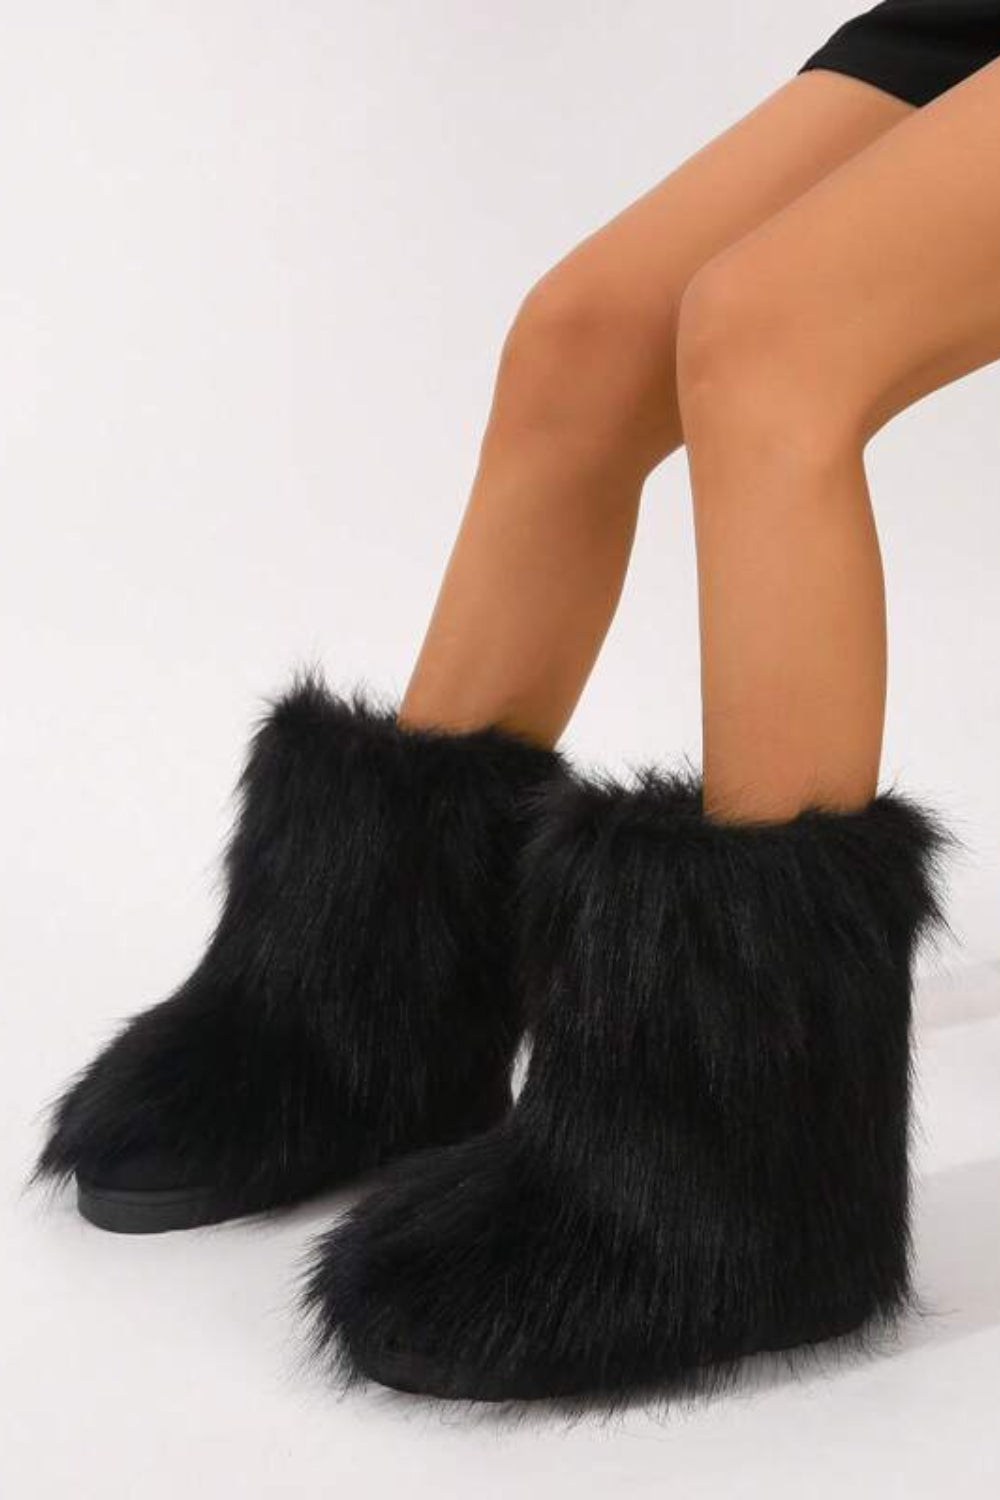 Black Fluffy Faux Fur Boots